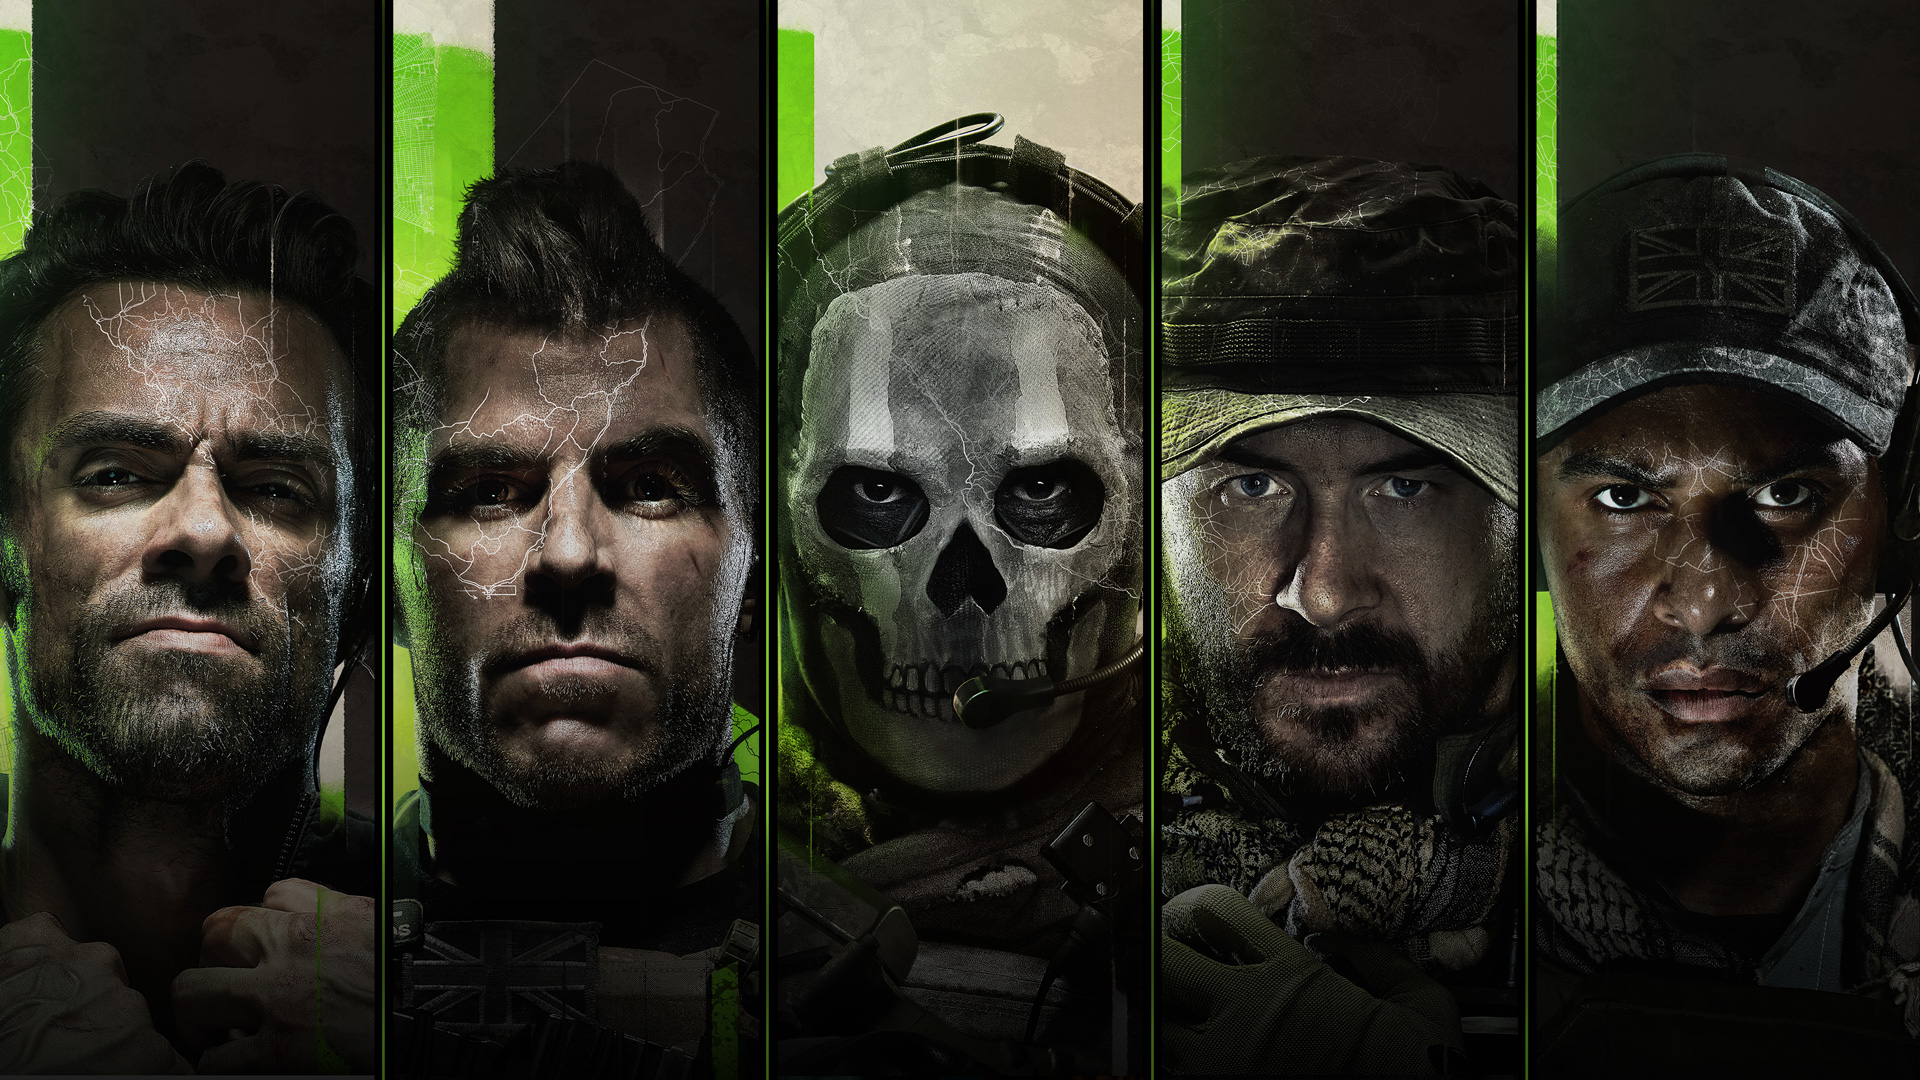 [PS5] Call of Duty: Modern Warfare II